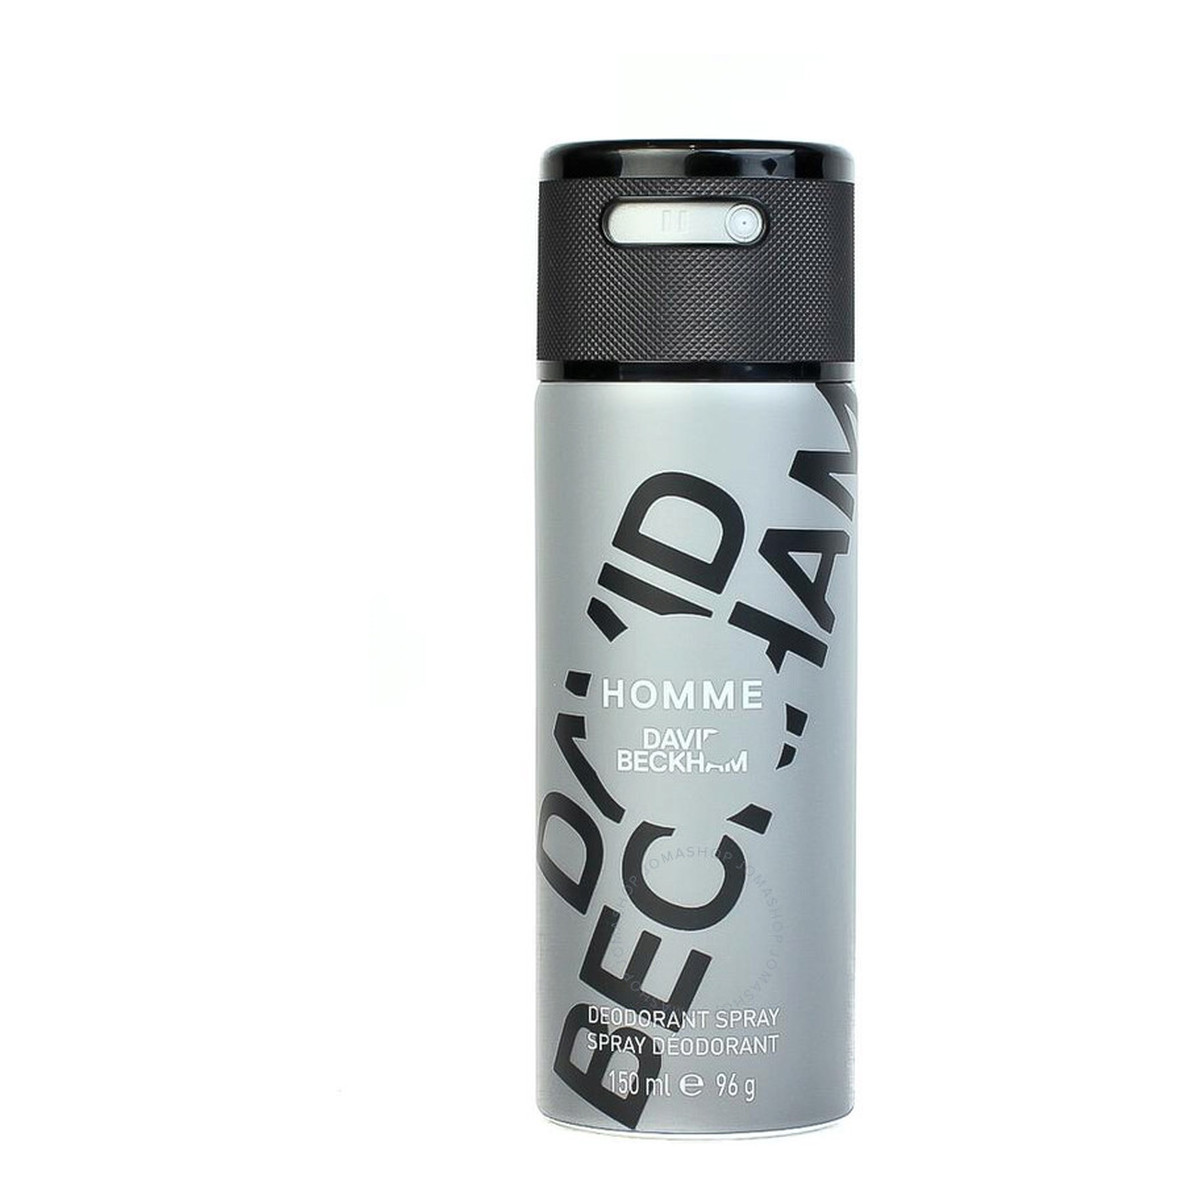 David Beckham Homme dezodorant 150ml